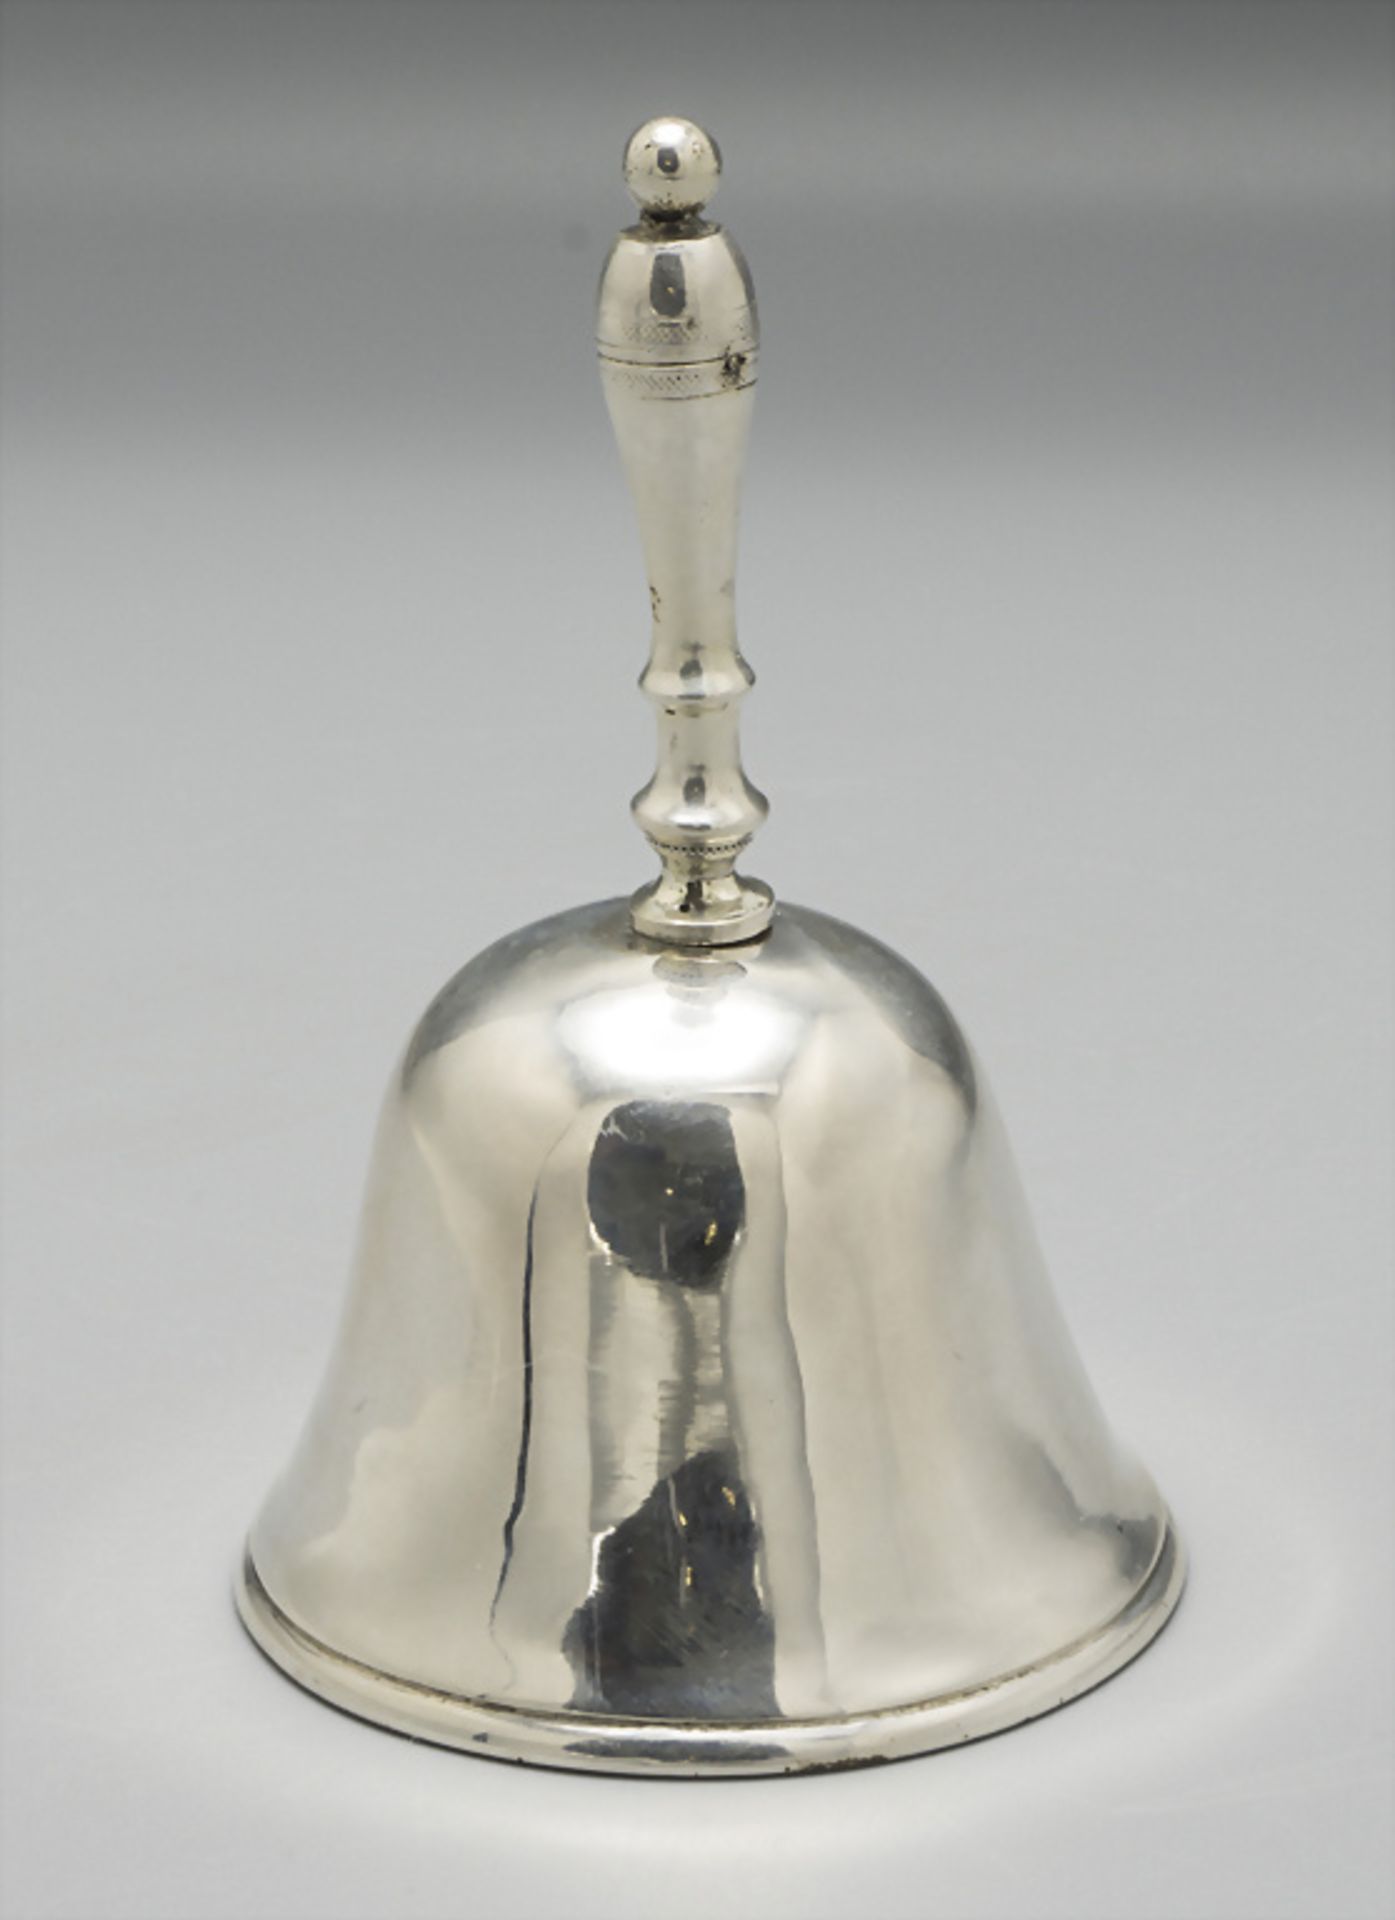 Tischglocke / A silver table bell